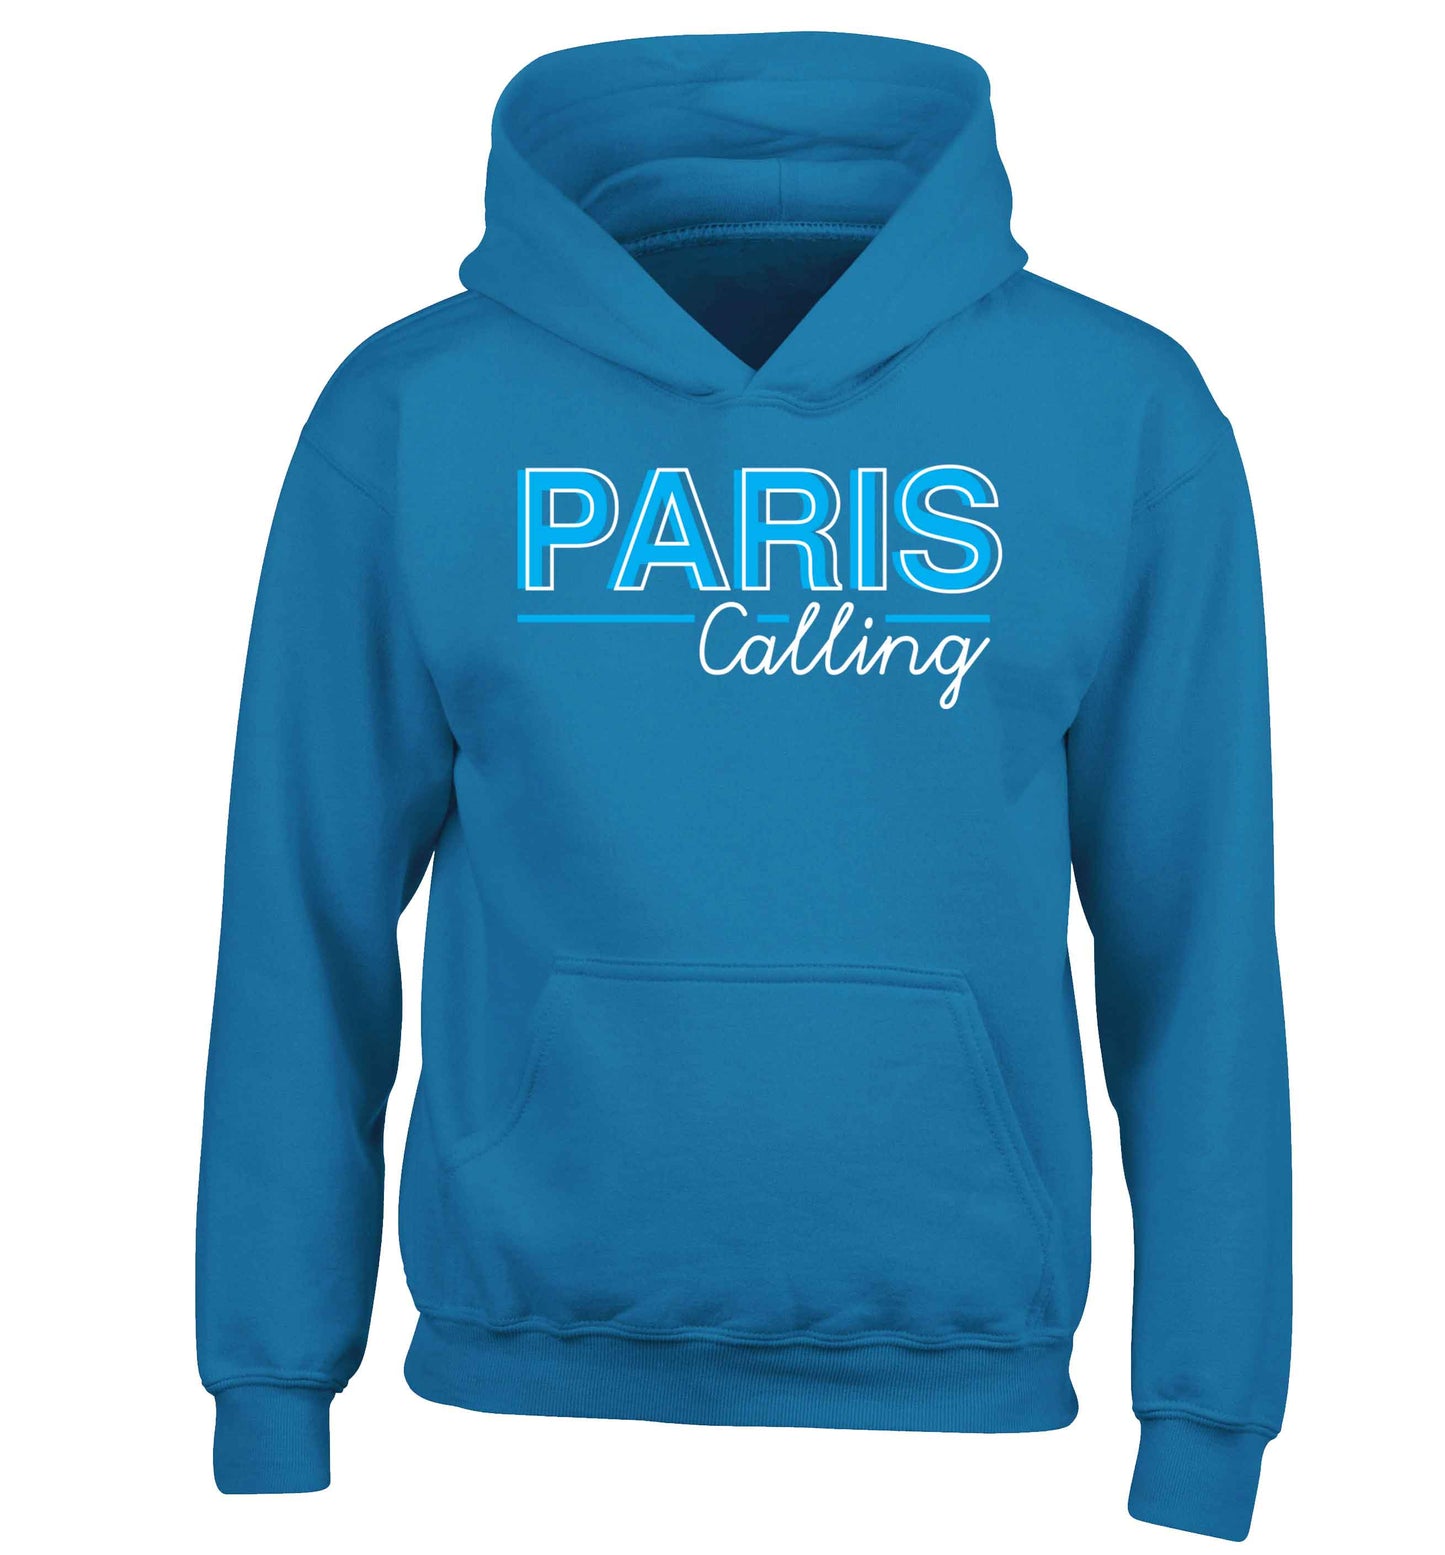 Paris calling children's blue hoodie 12-13 Years